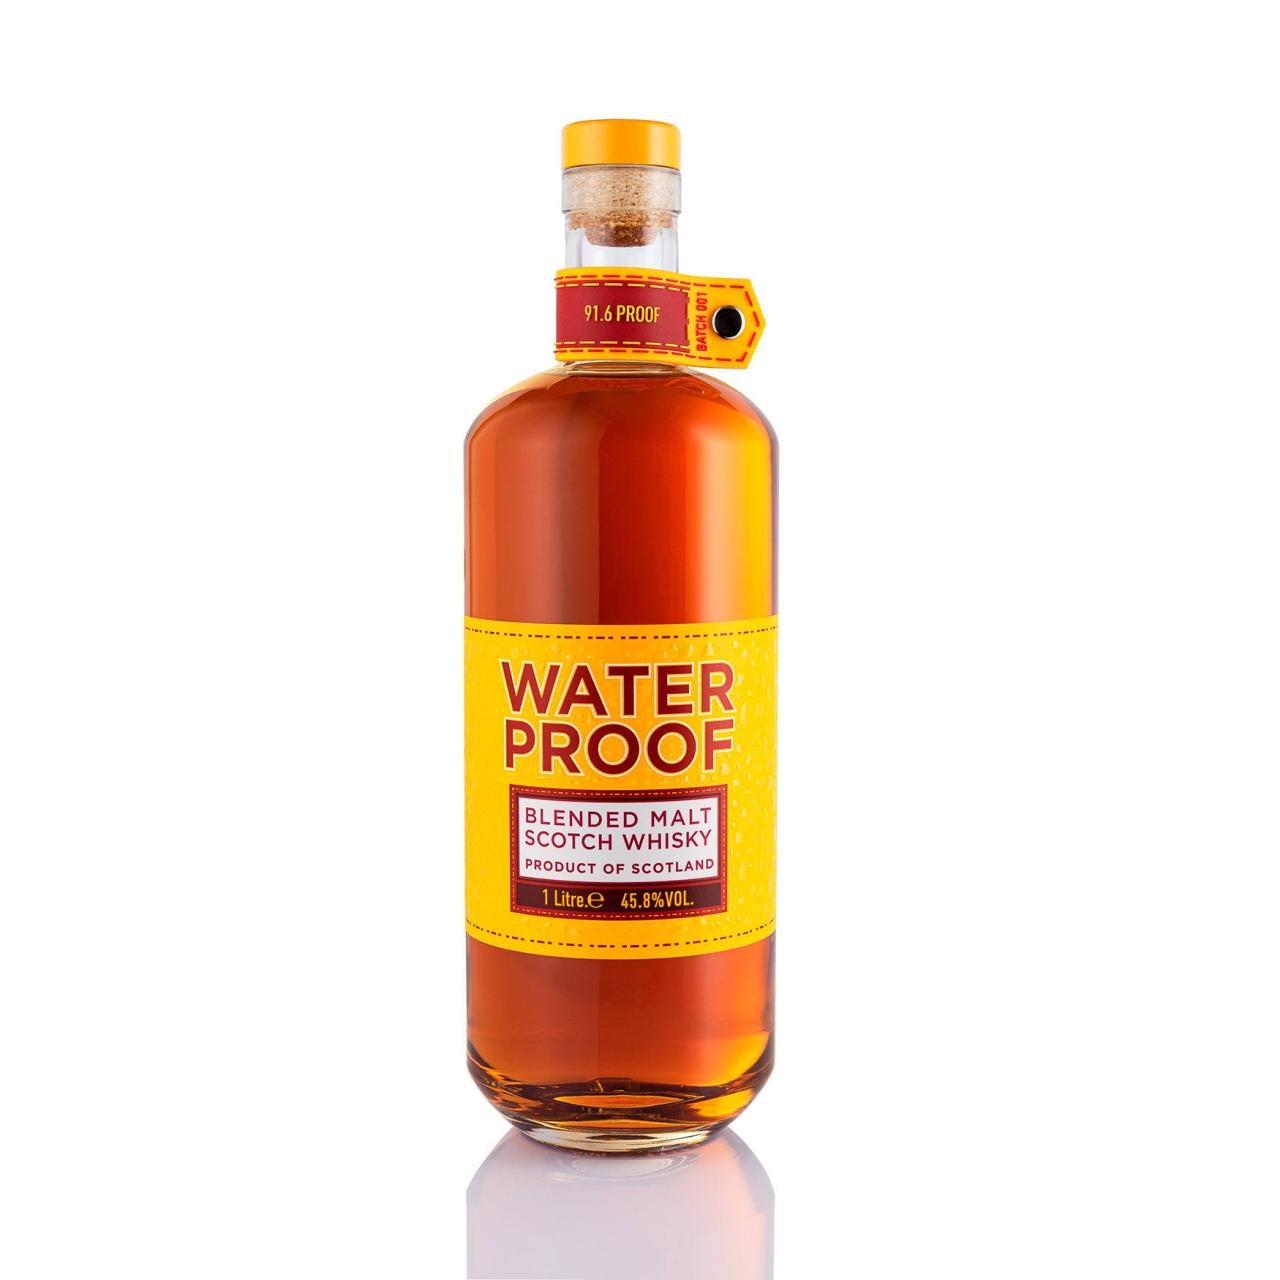 Water Proof Blended Malt Scotch Whisky 45,8% 1,0l